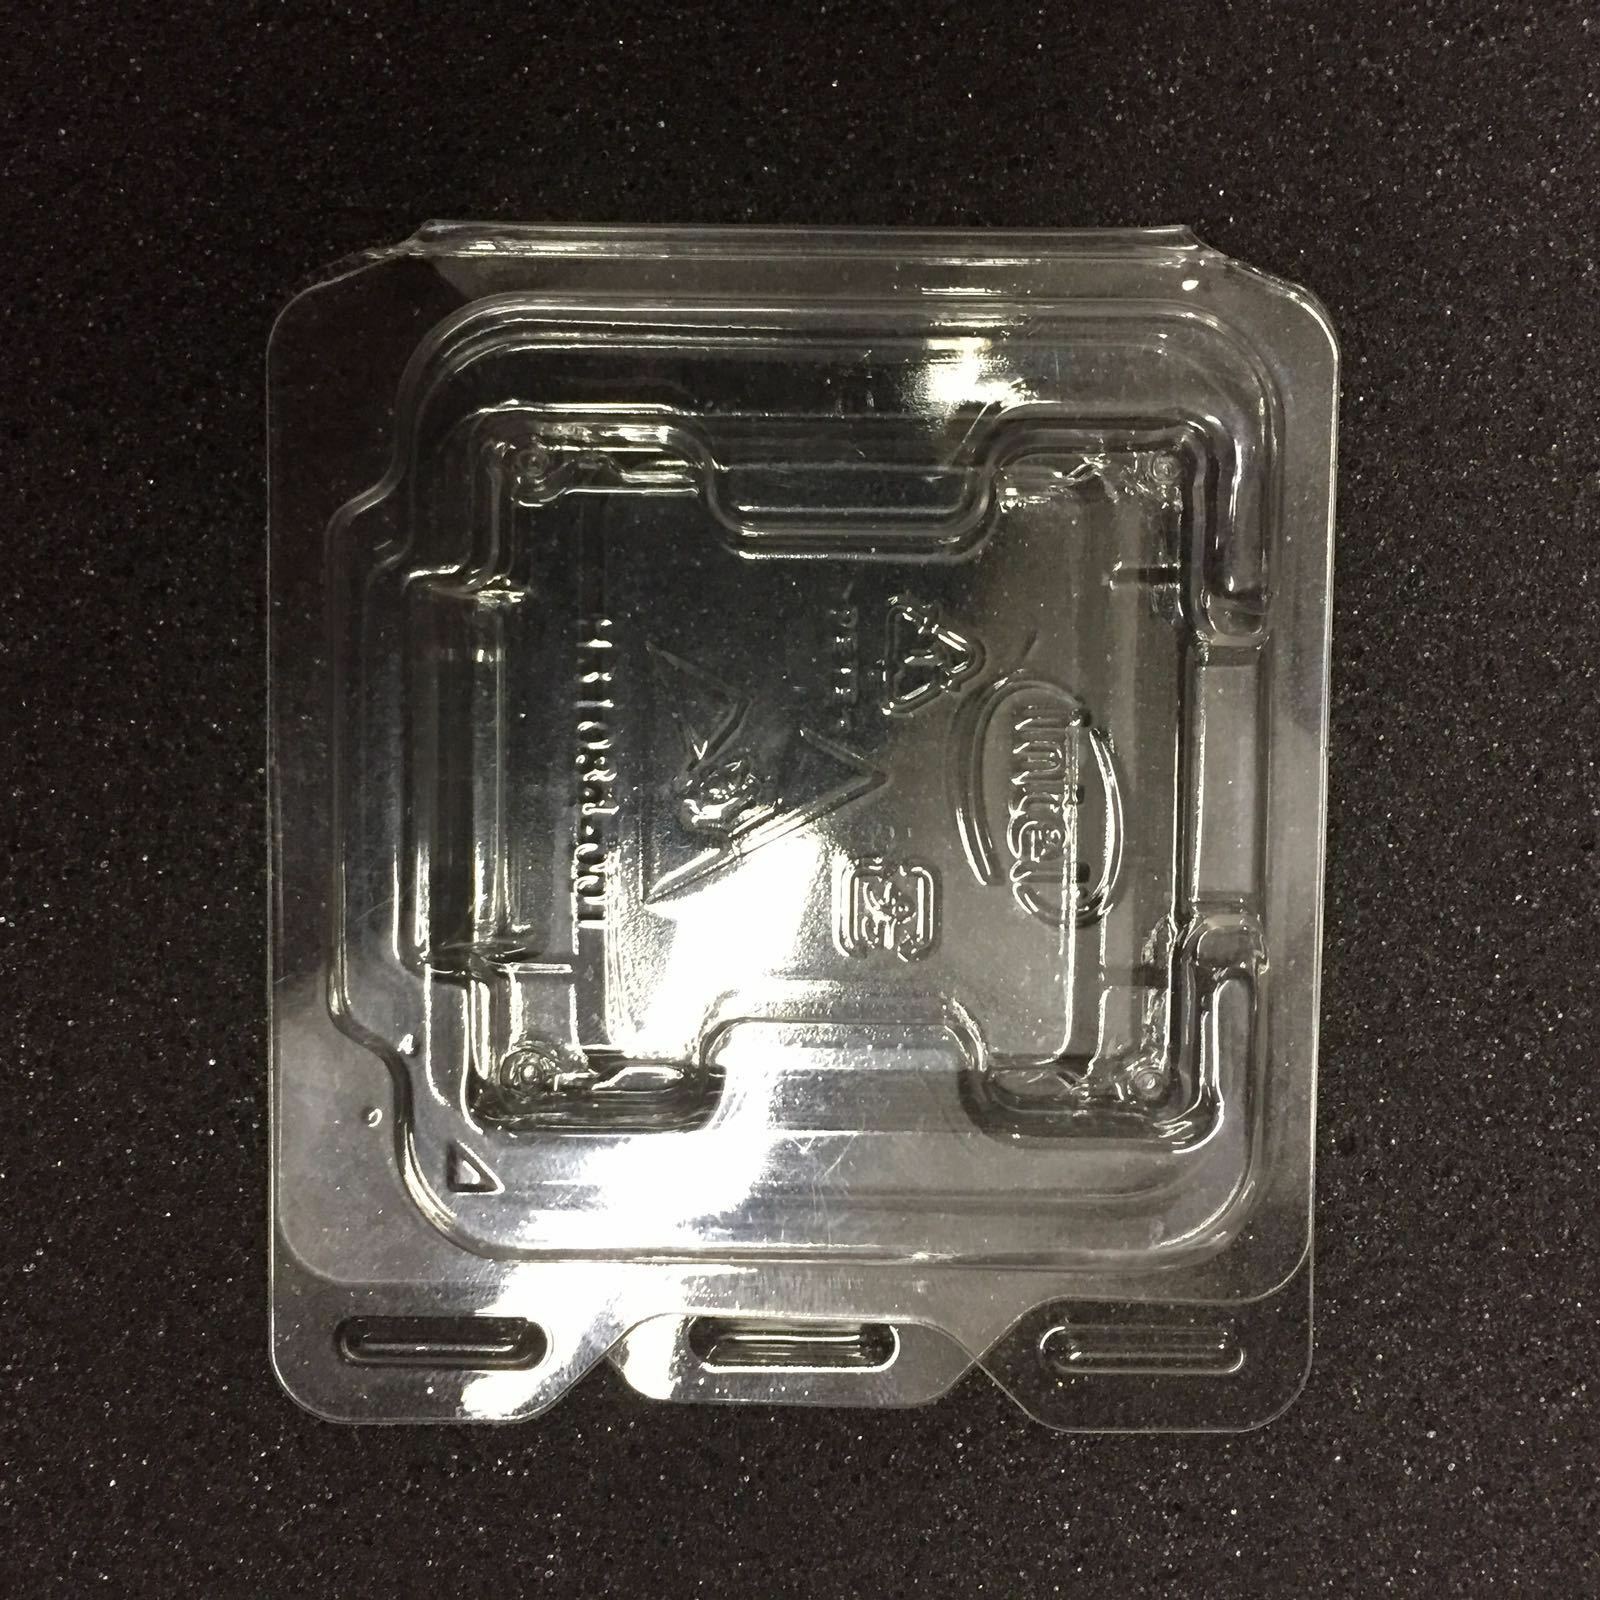 Intel Xeon Socket Lga 2011 2011-3 Cpu Case Holder Protector Cover